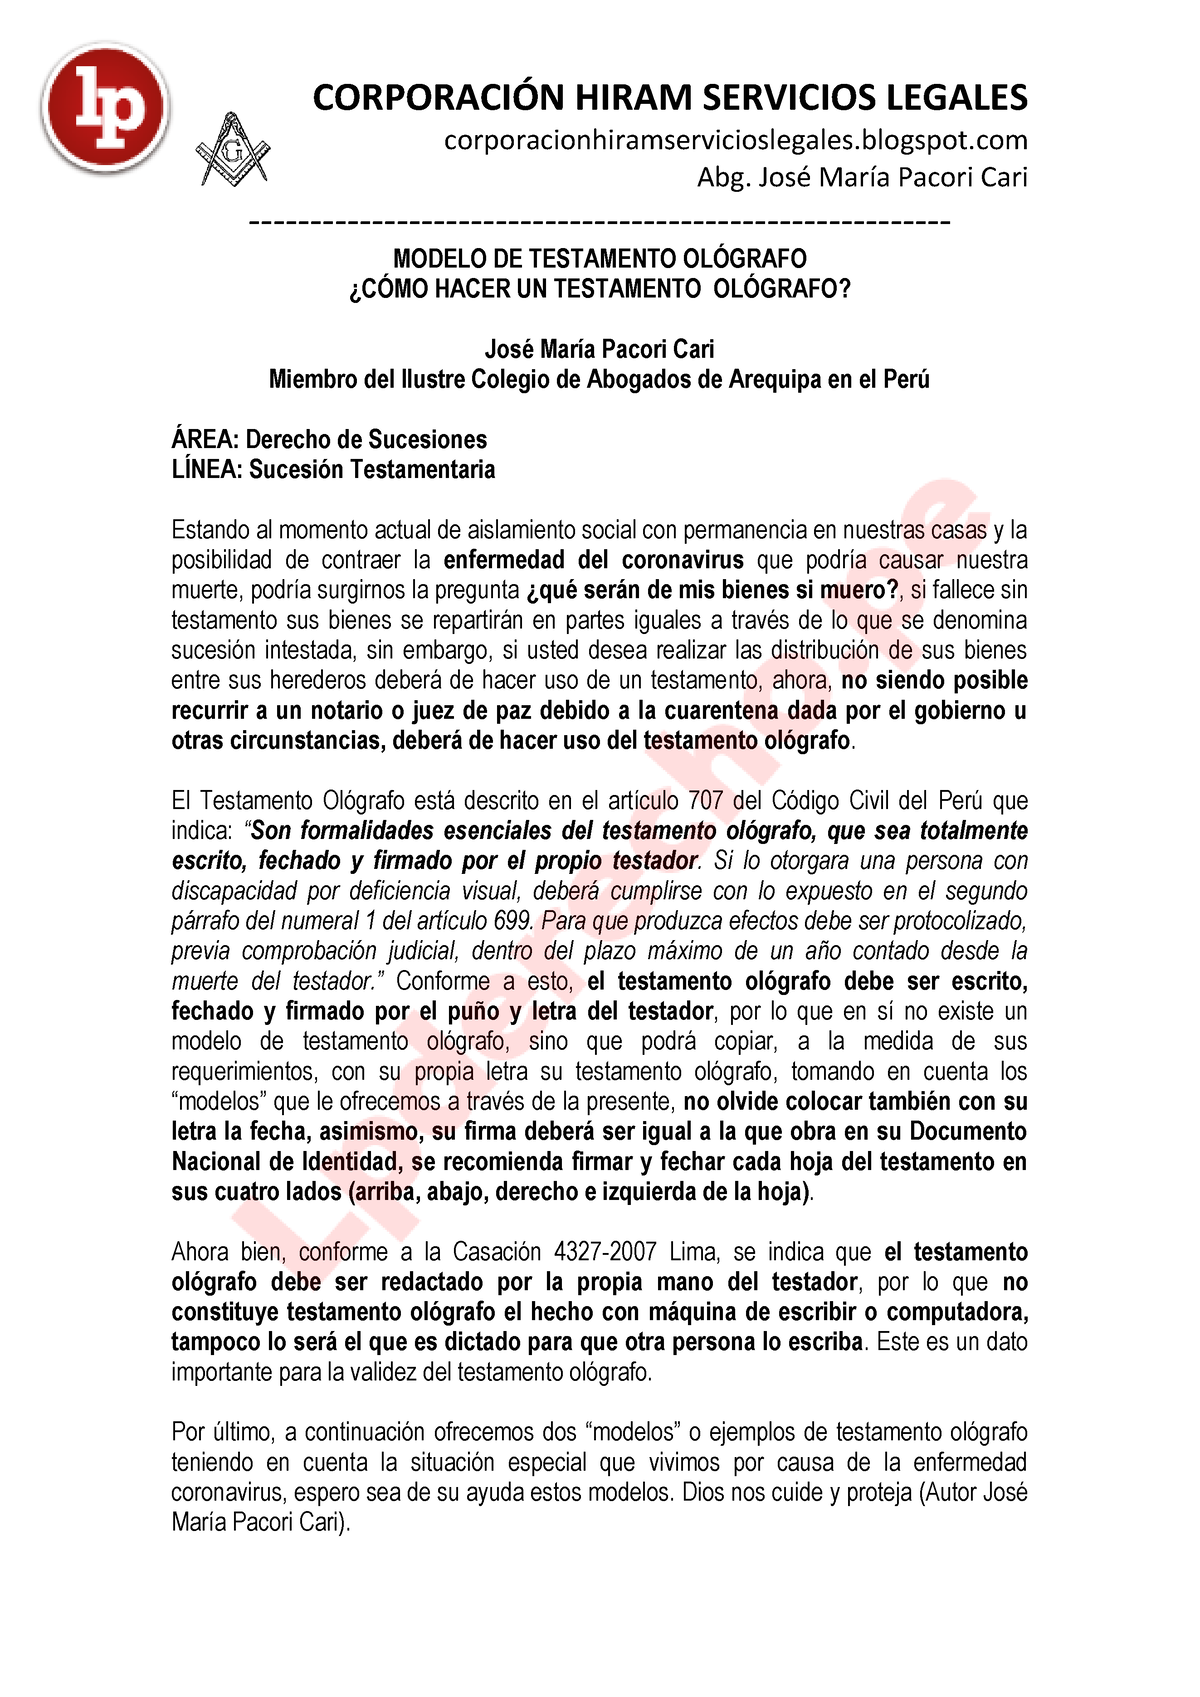 Modelo de testamento olografo LP - CORPORACI”N HIRAM SERVICIOS LEGALES -  Studocu